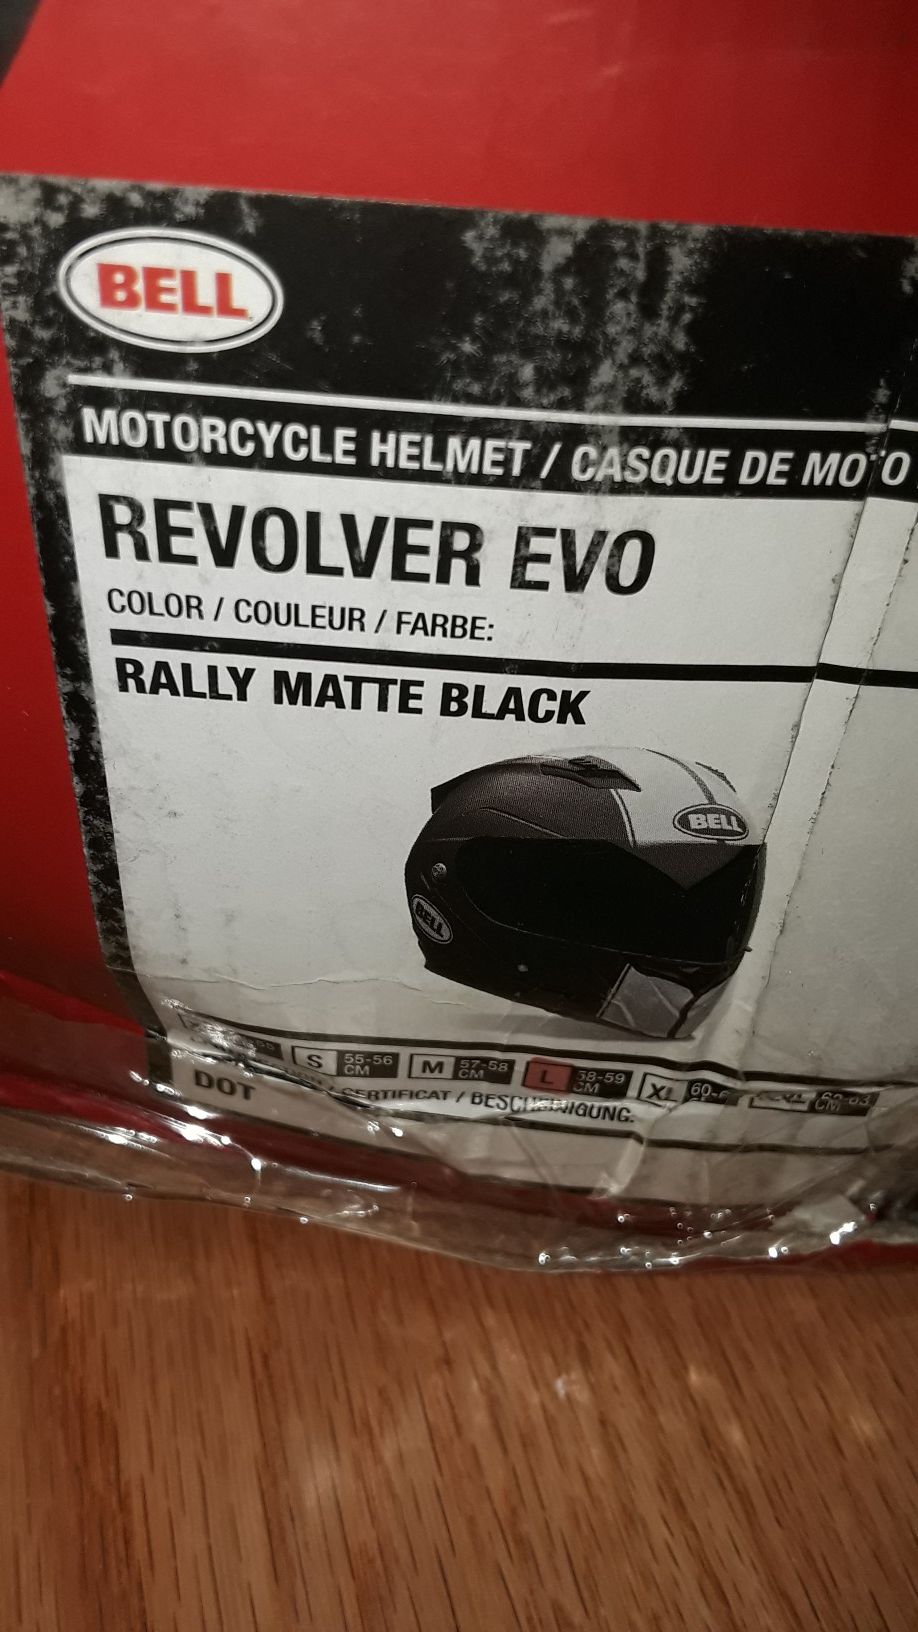 Bell Revolver Evo (New) motorcycle helmet